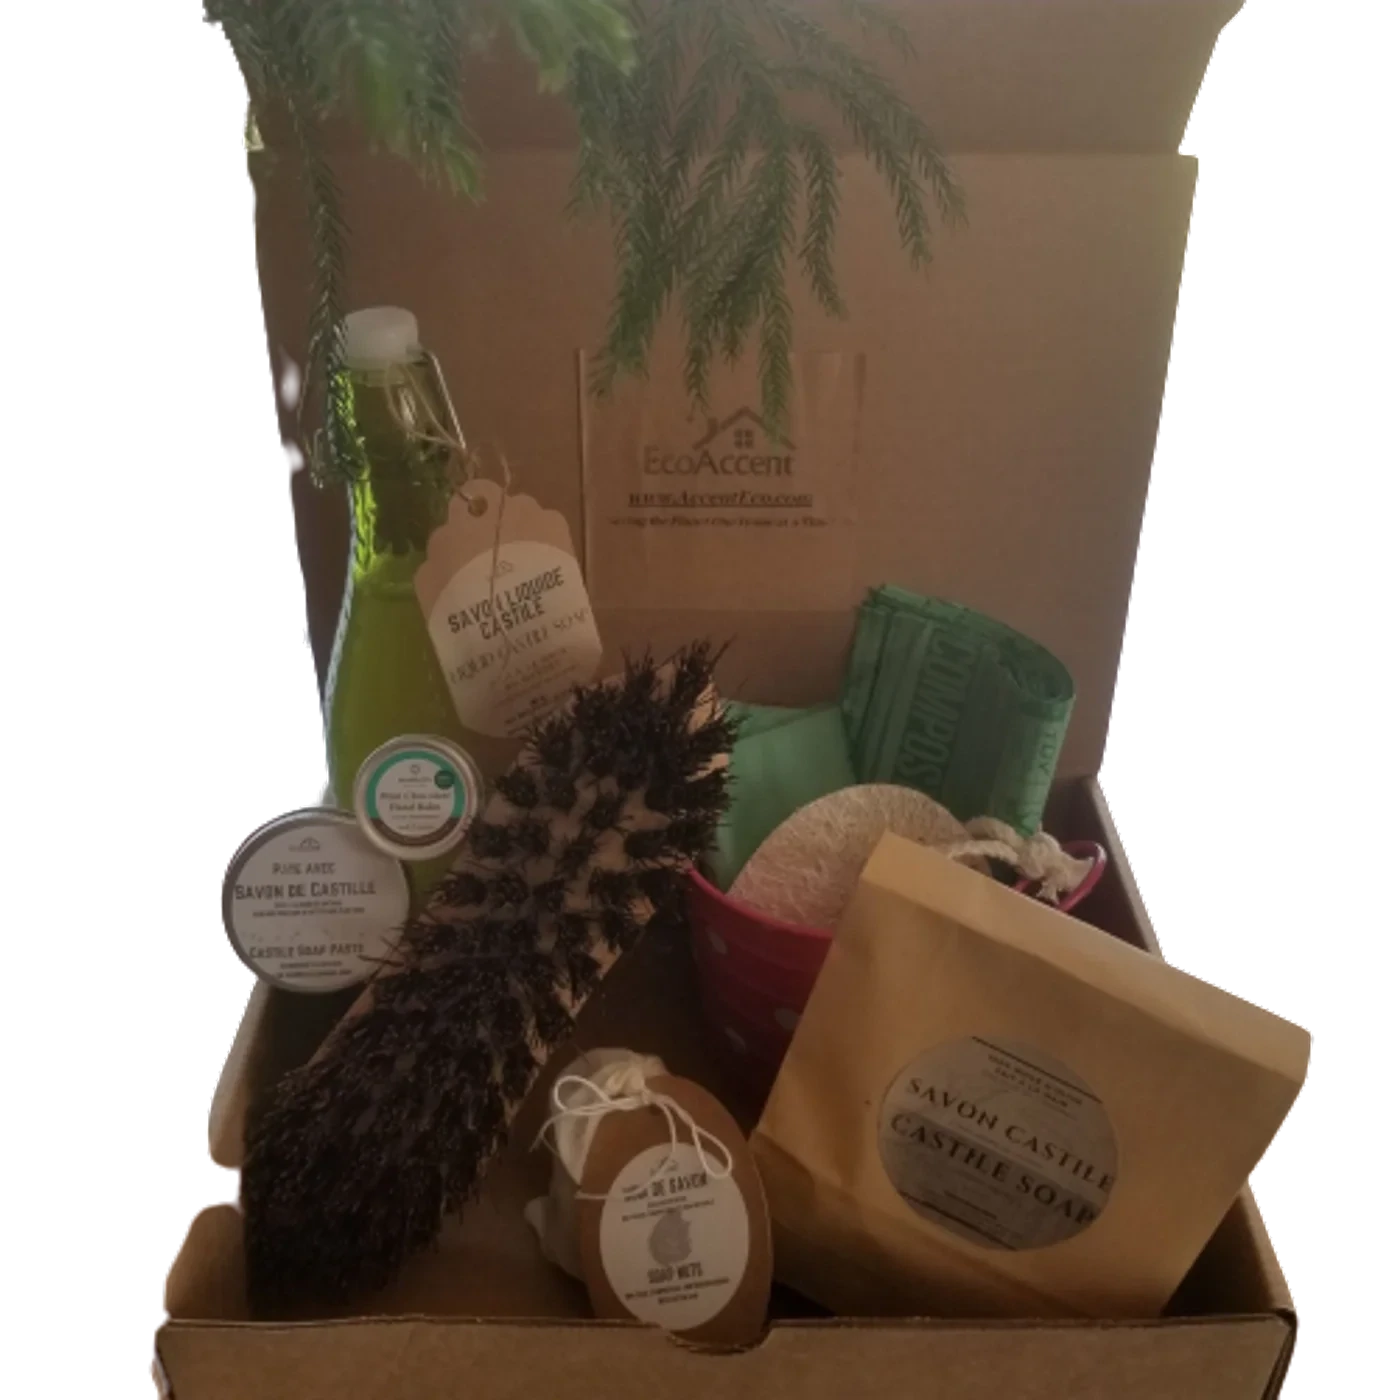 EkoAccent Sustainable & Zero Waste Home Care Box